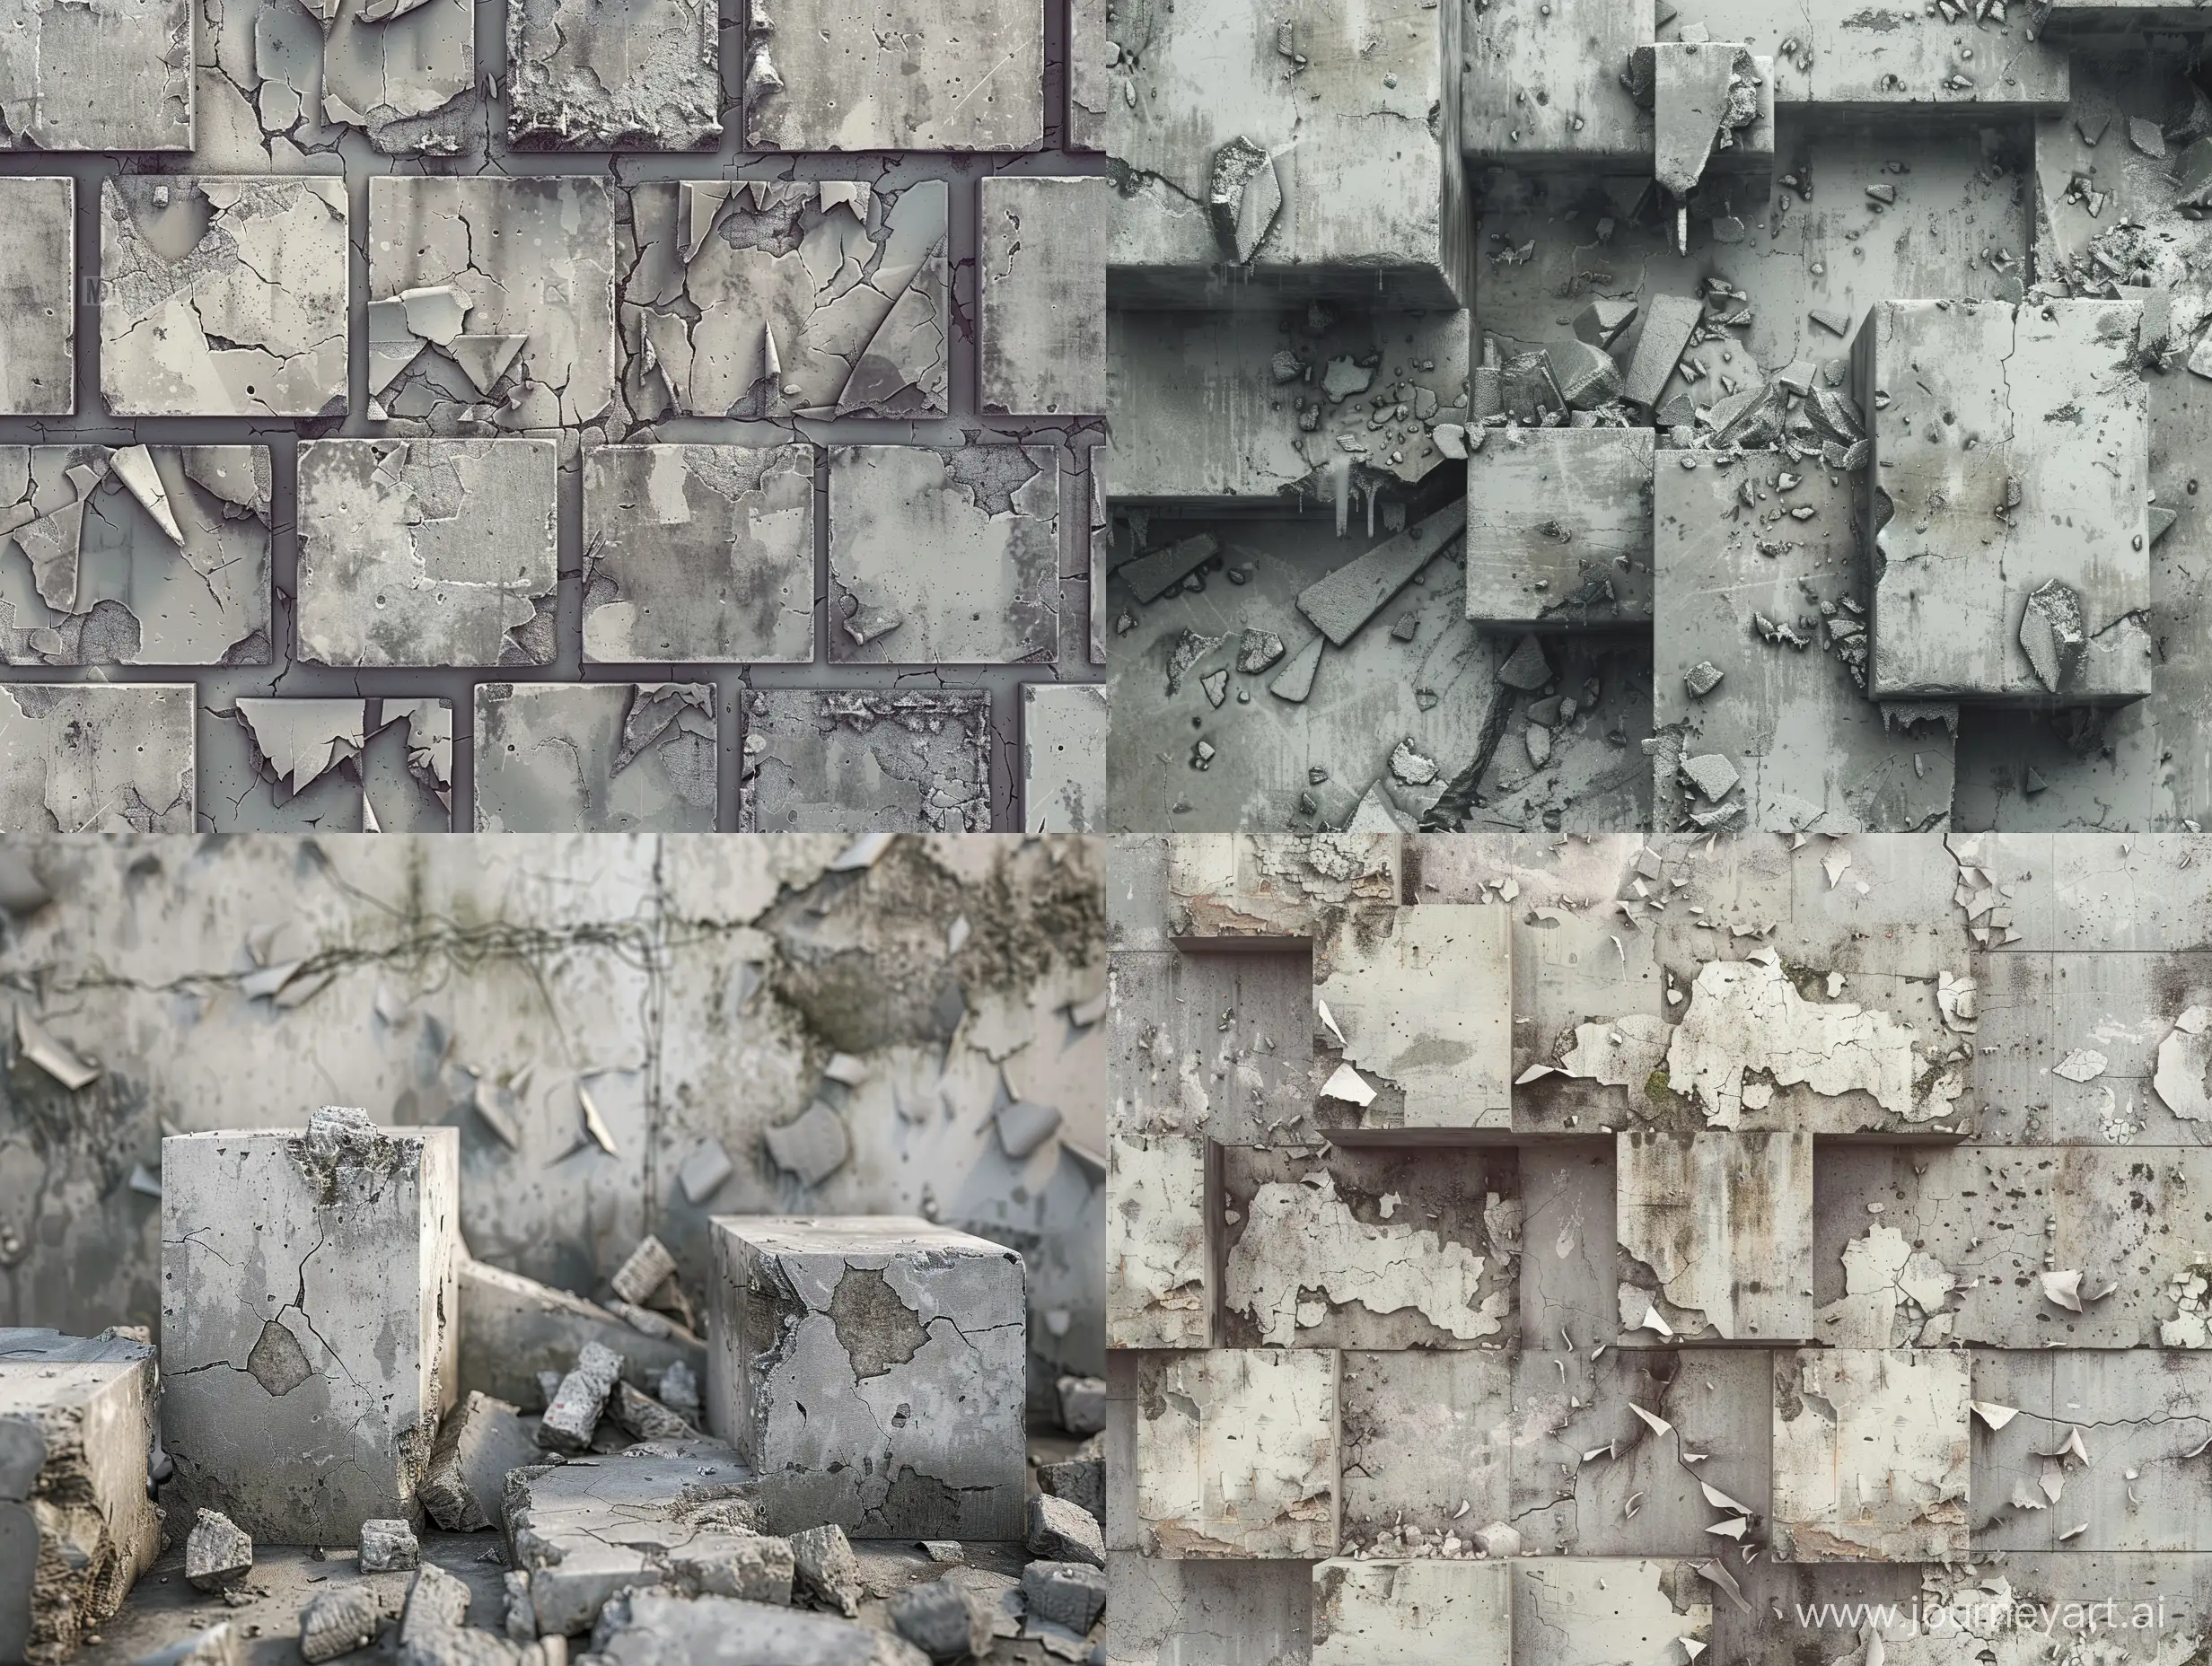 PostApocalyptic-Urban-Landscape-Concrete-Ruins-and-Peeling-Walls-for-2D-Platformer-Game